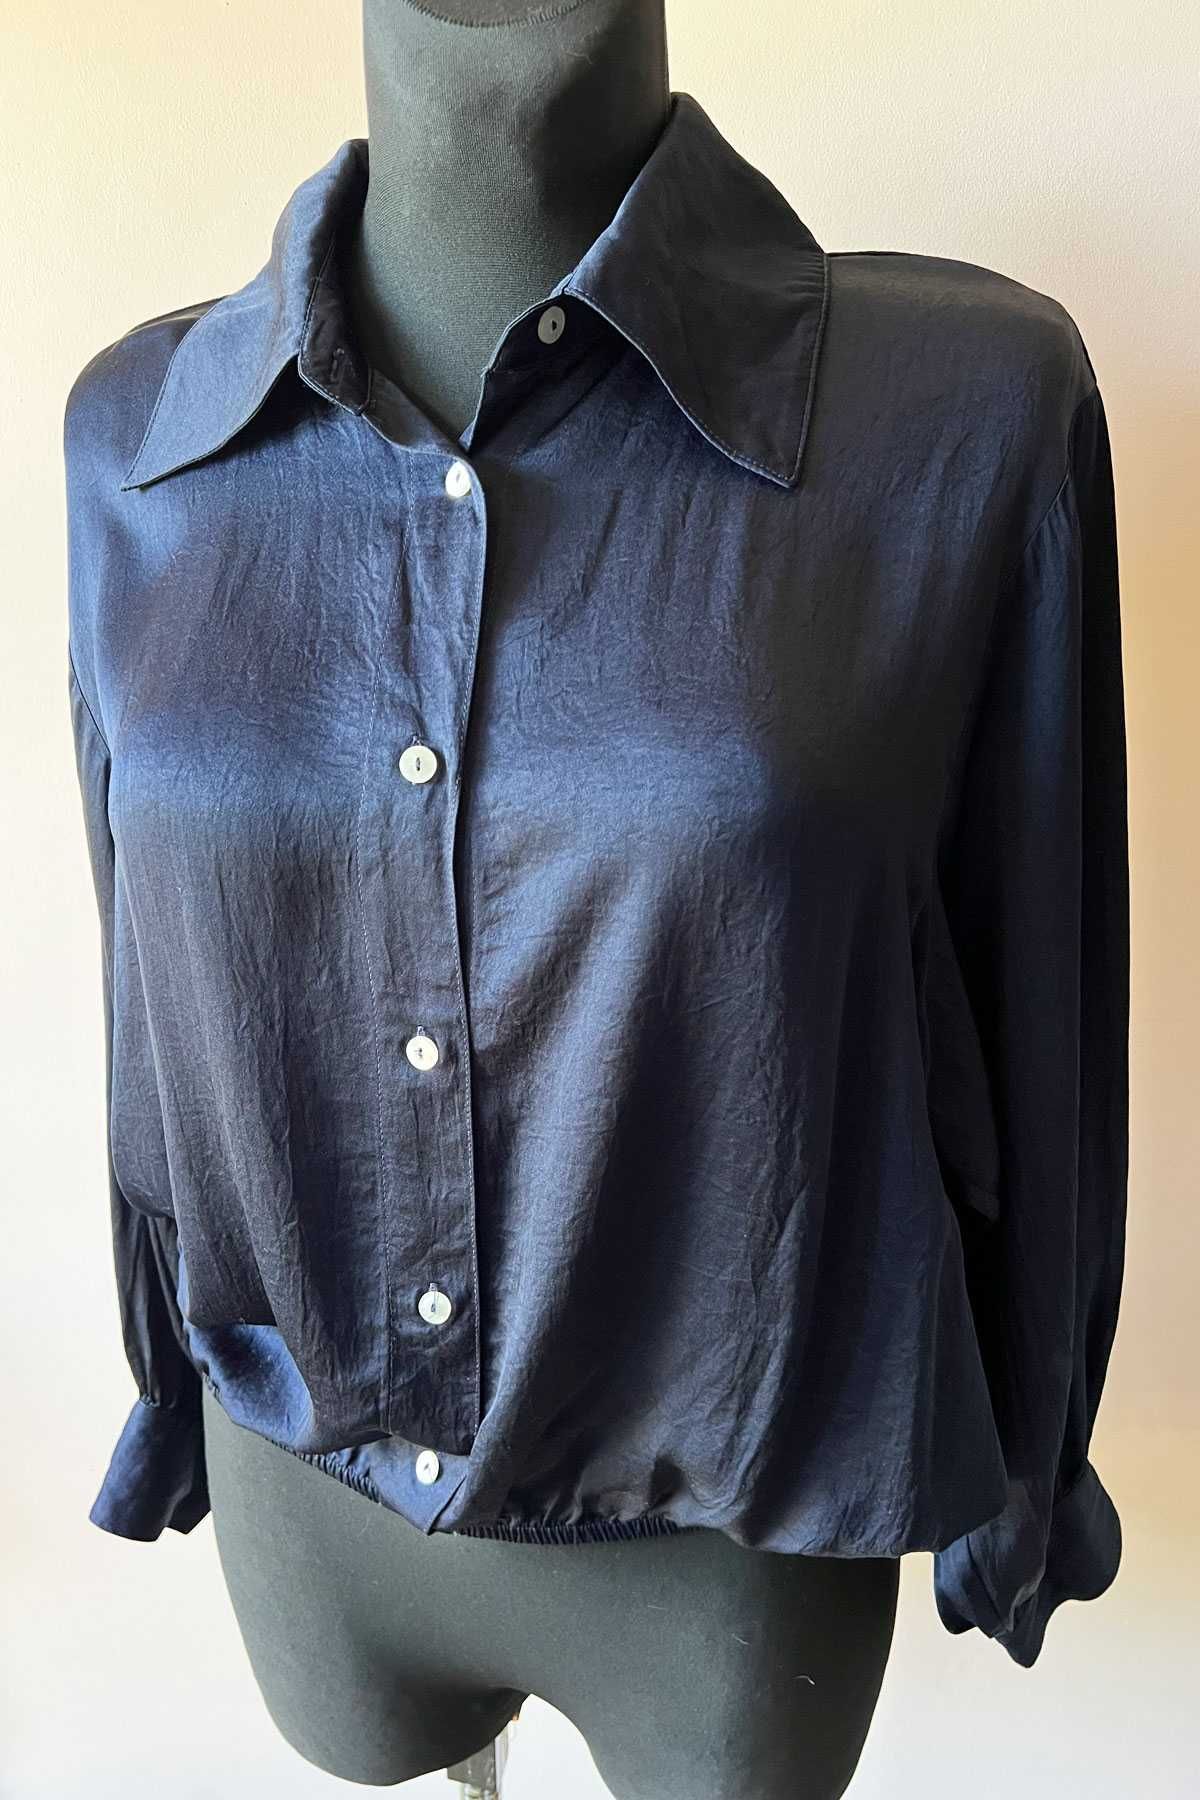 American Vintage granatowa koszula bluzka długi rękaw 100% acetat M/L